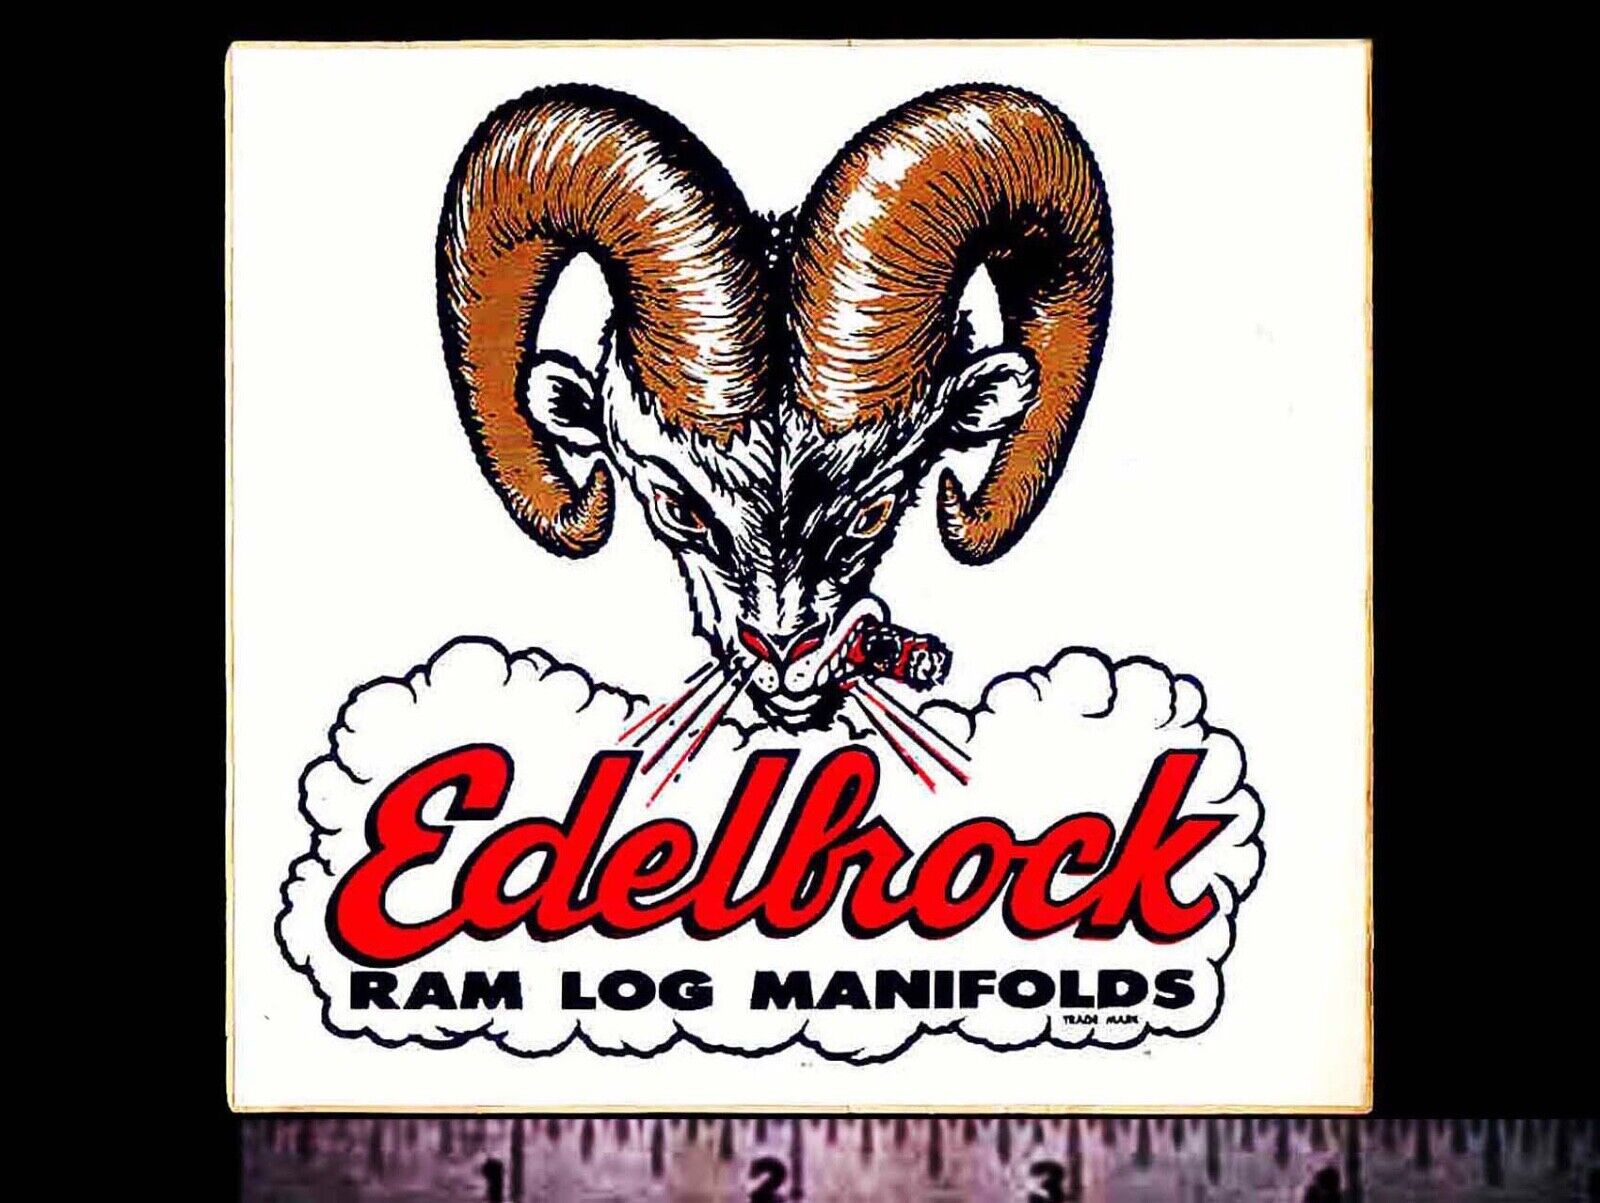 EDELBROCK Ram Log Manifolds - Original Vintage 1960’s 70's Racing Decal/Sticker